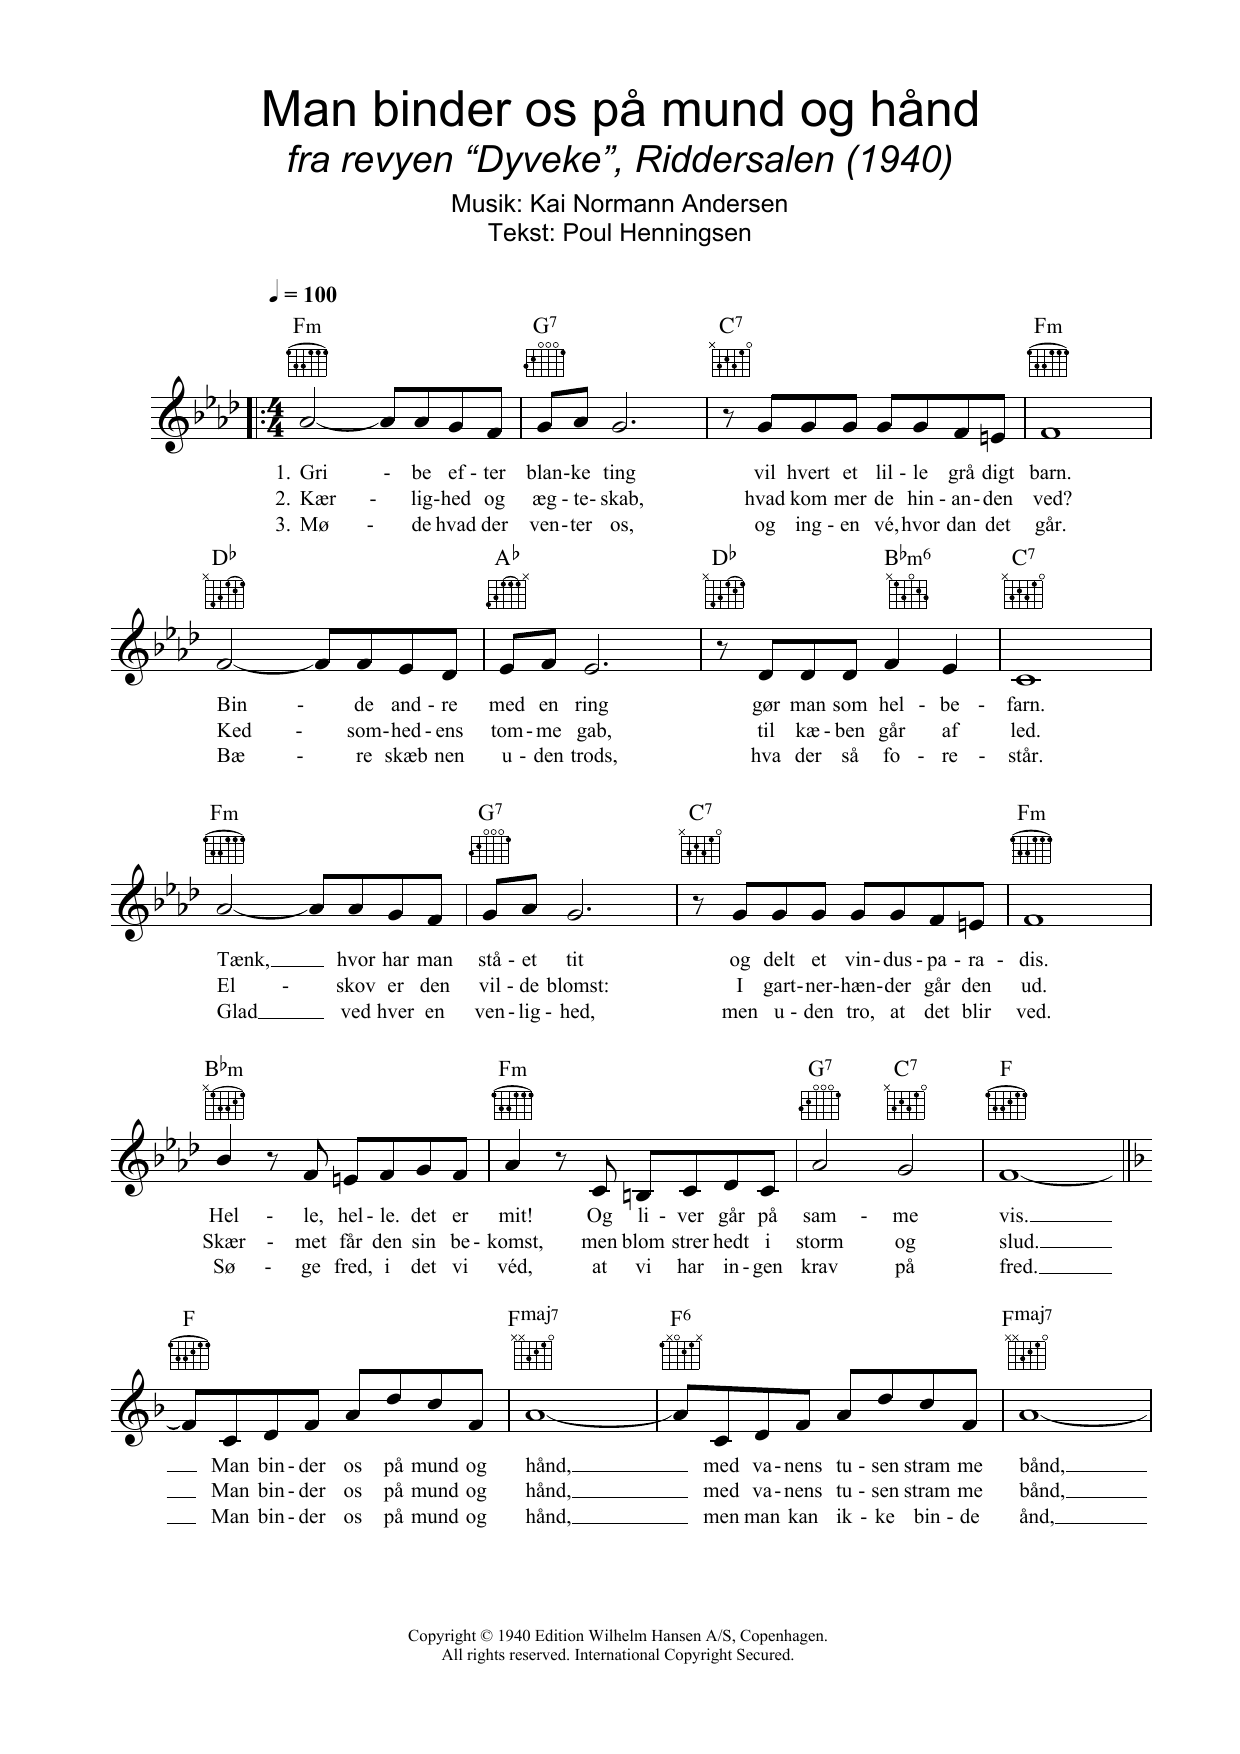 Download Kai Normann Andersen Man Binder Os På Mund Og Hånd Sheet Music and learn how to play Melody Line, Lyrics & Chords PDF digital score in minutes